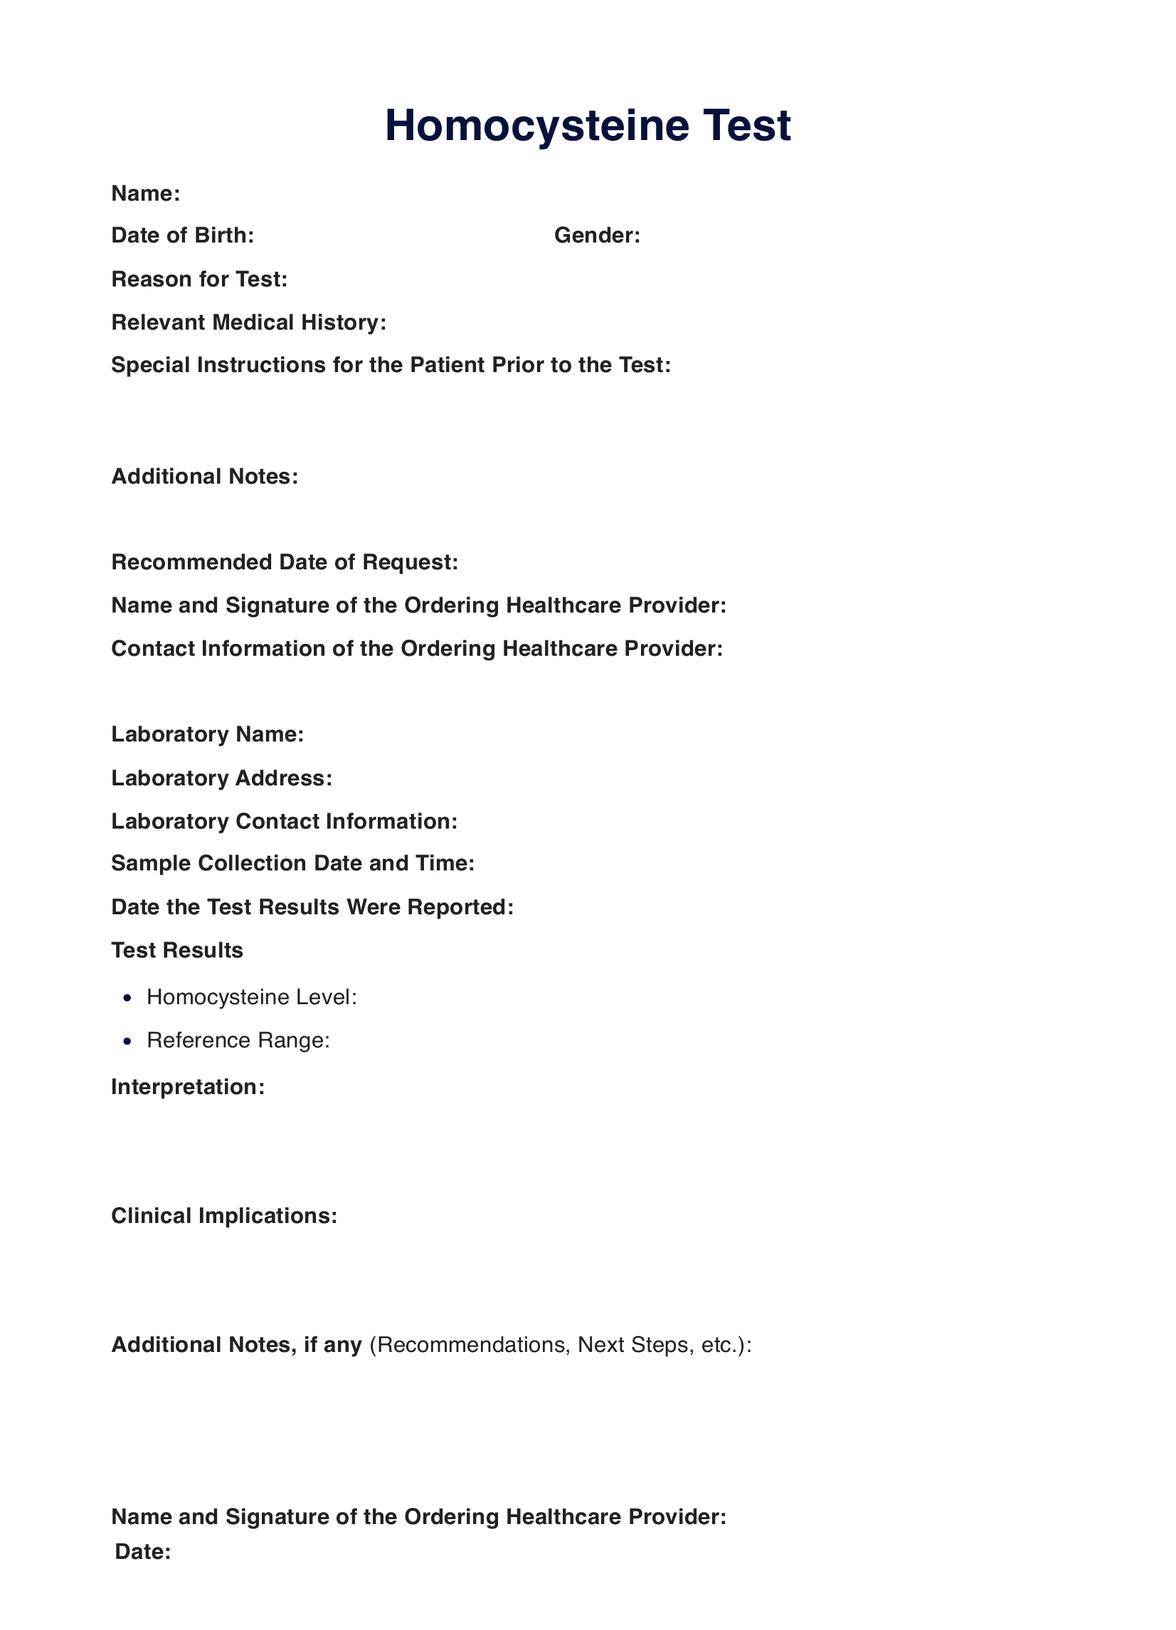 Homocysteine Test PDF Example